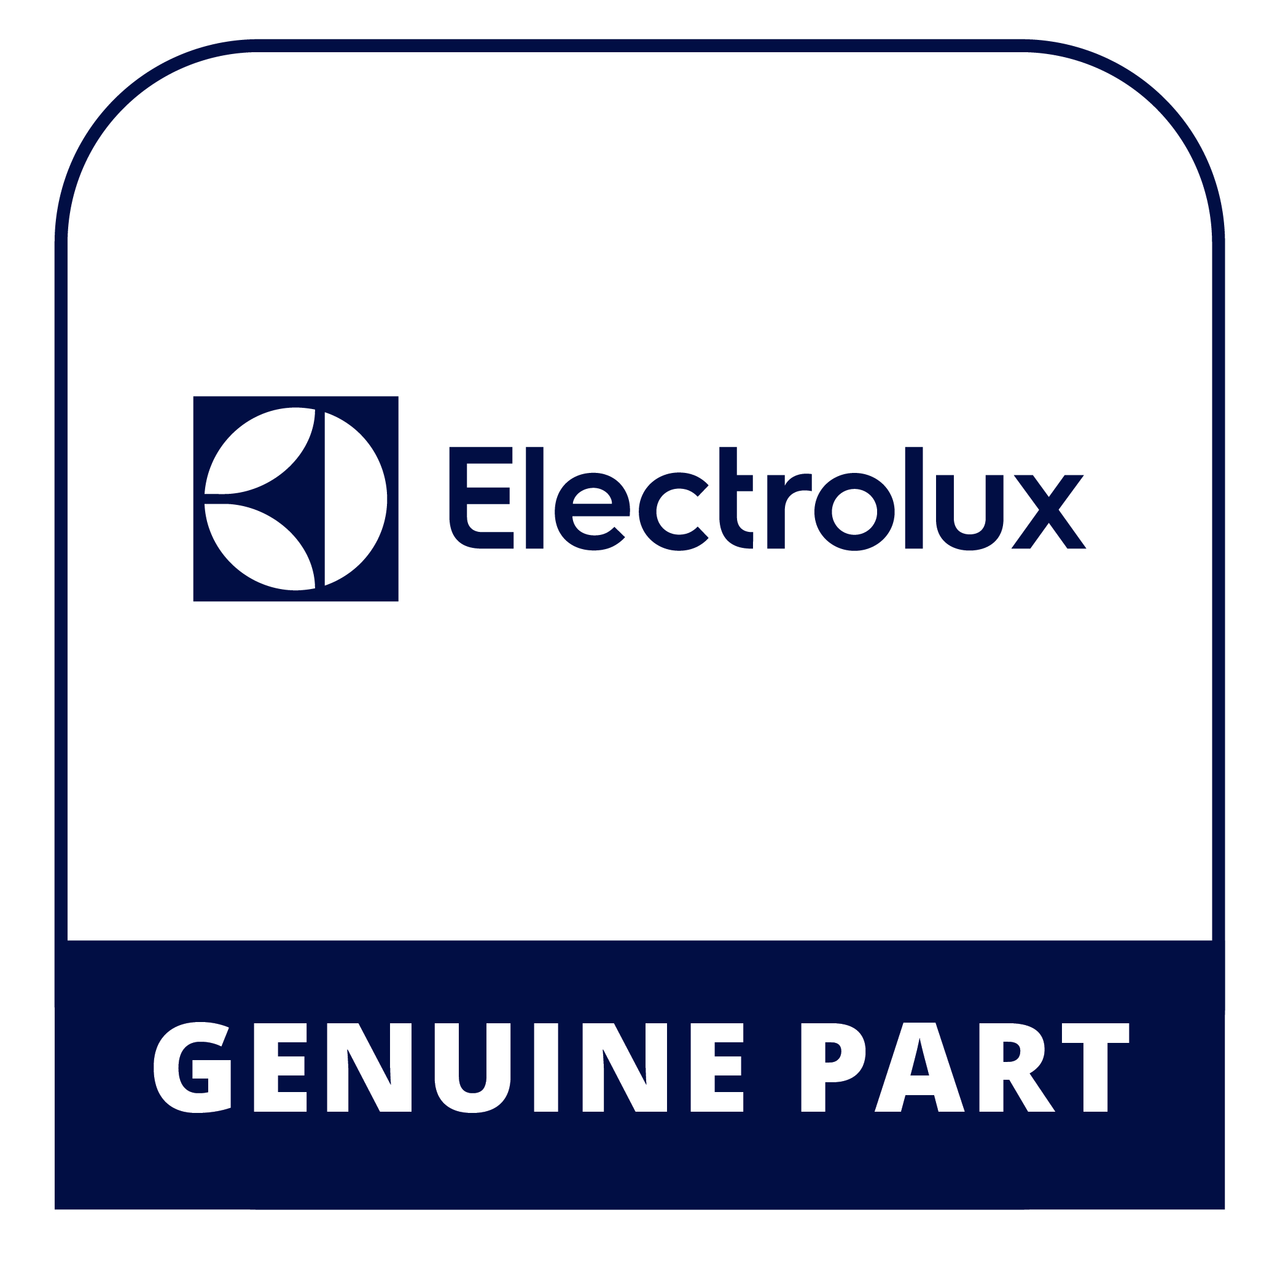 Frigidaire - Electrolux 134045100 Cover - Genuine Electrolux Part